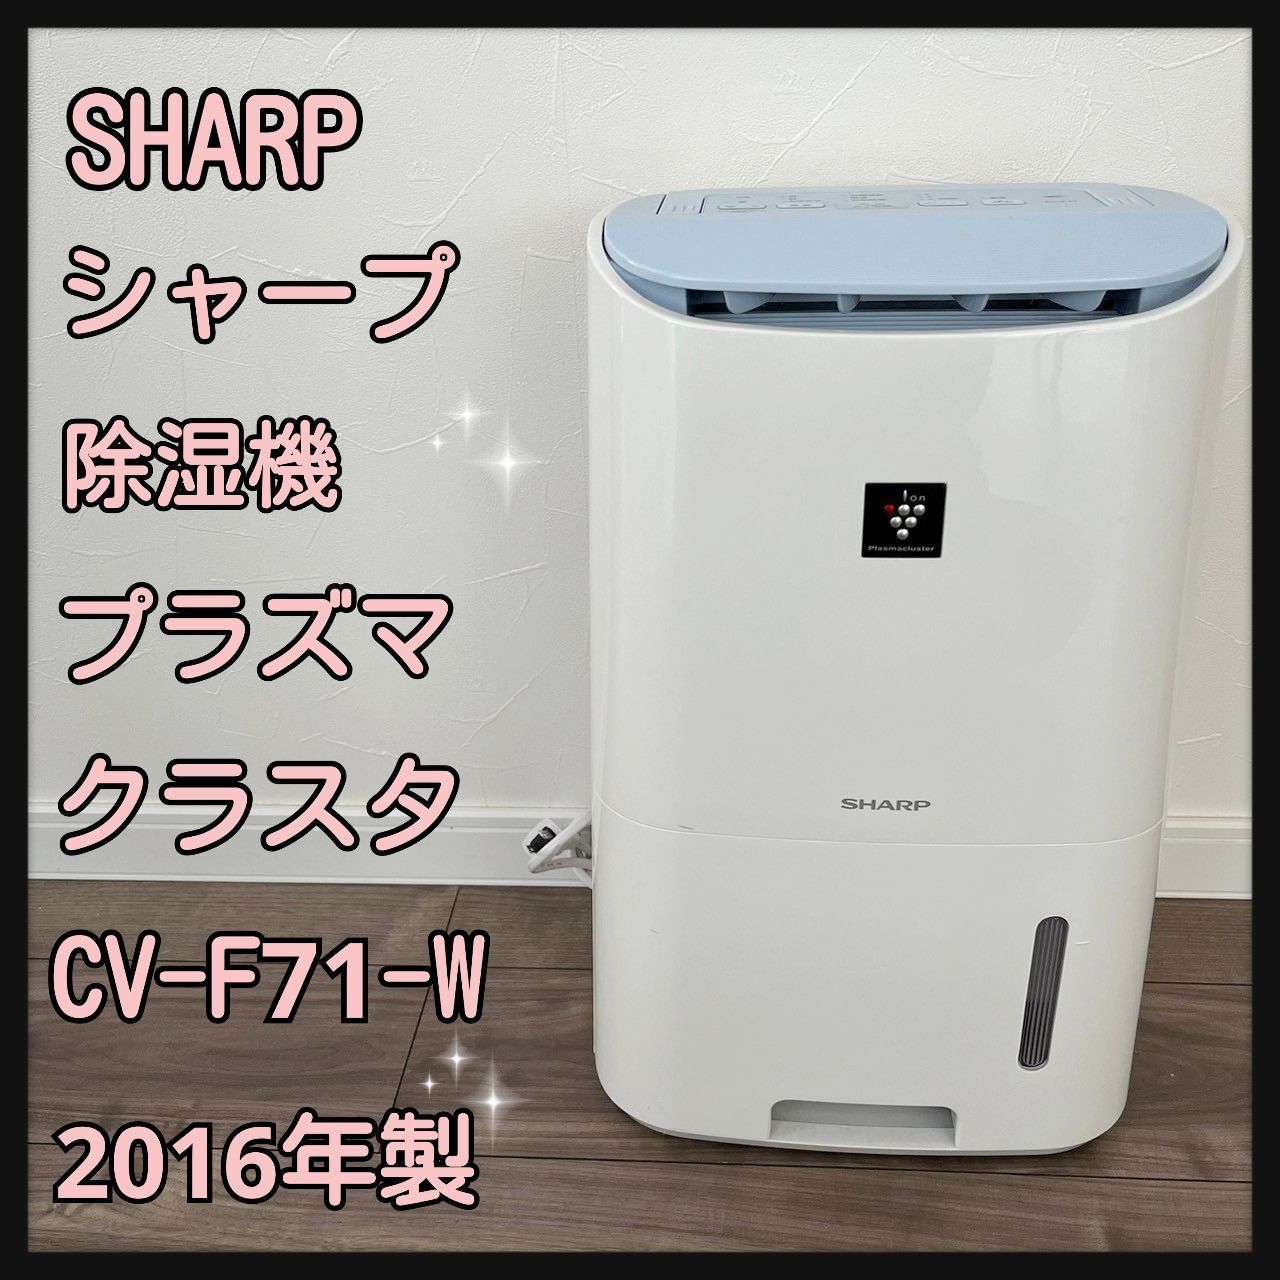 SHARP シャープ 除湿機 CV-F71-W 2016年製 プラズマクラスタ7000 衣類 